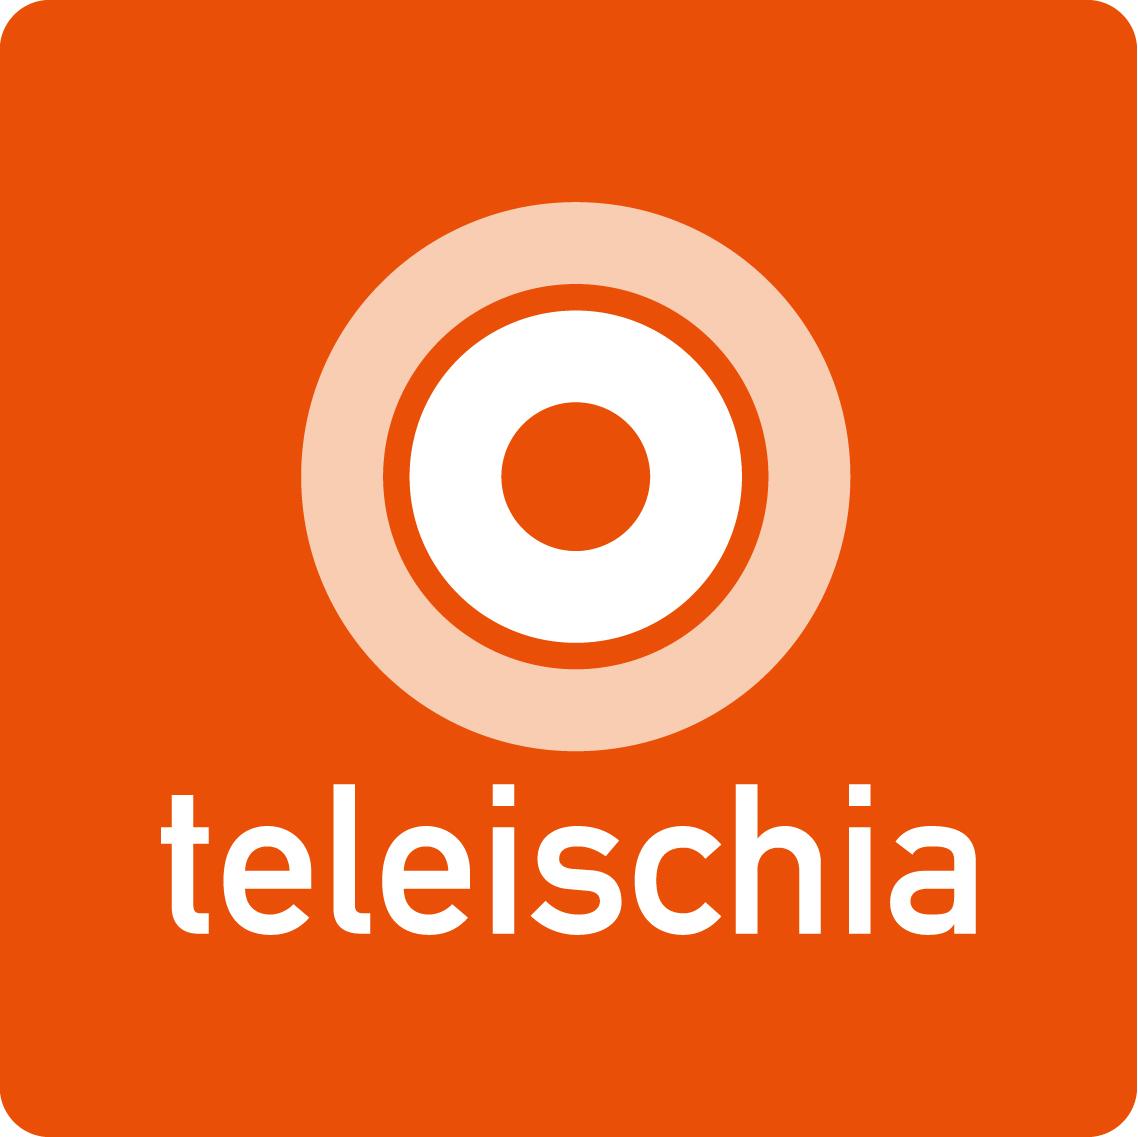 Teleischia logo comp